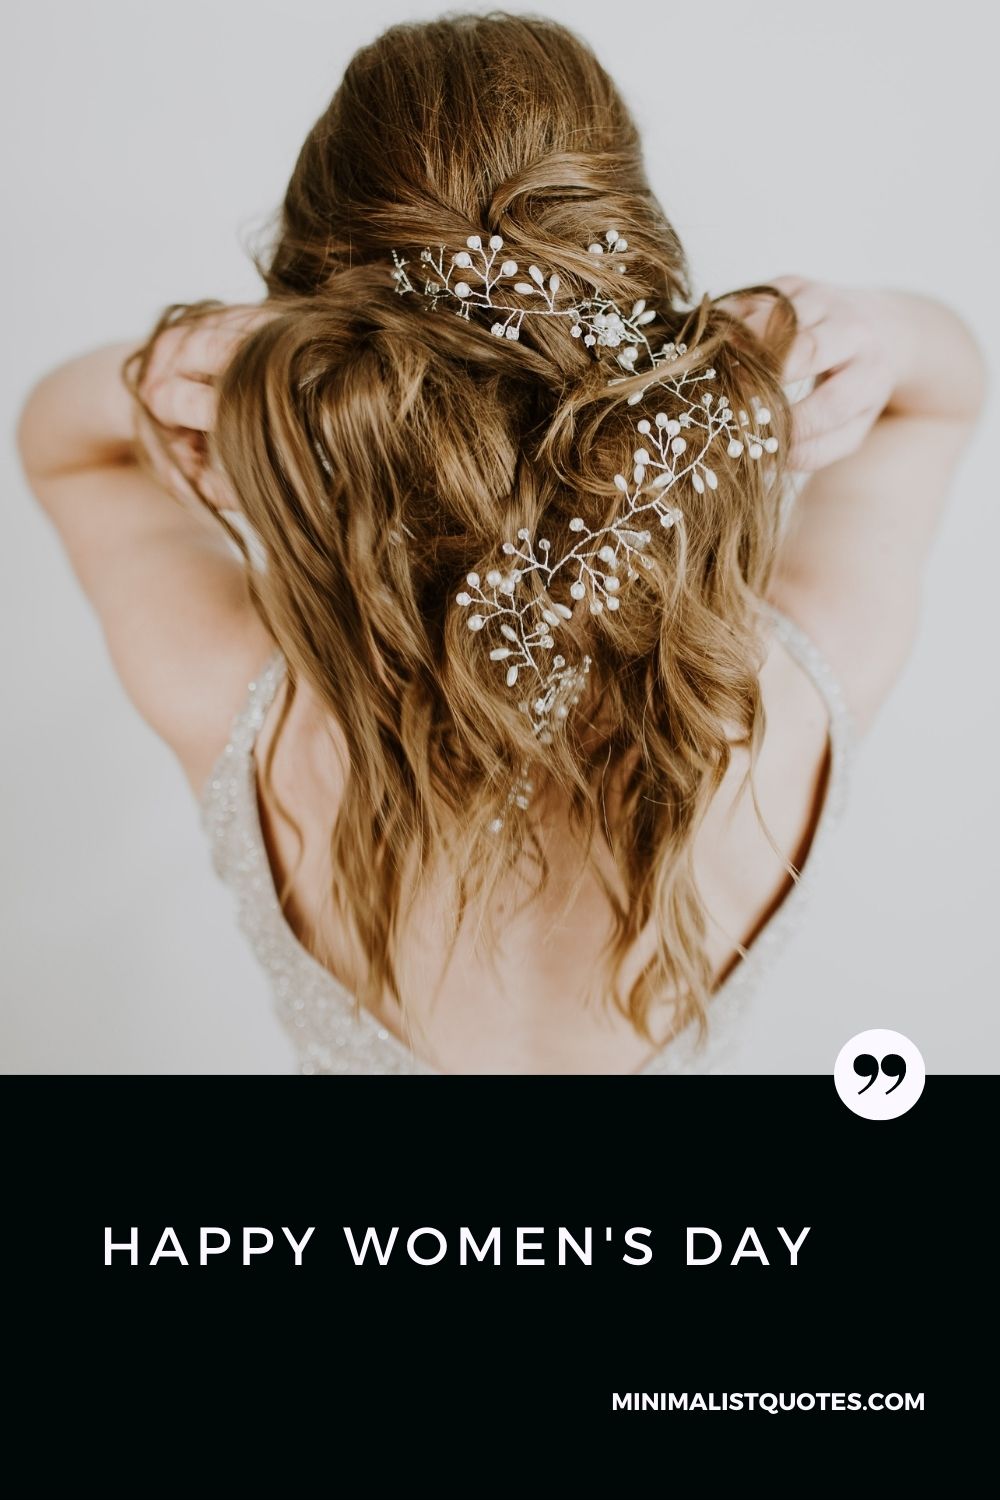 Happy Women's Day Greeting - Beautiful hairs.